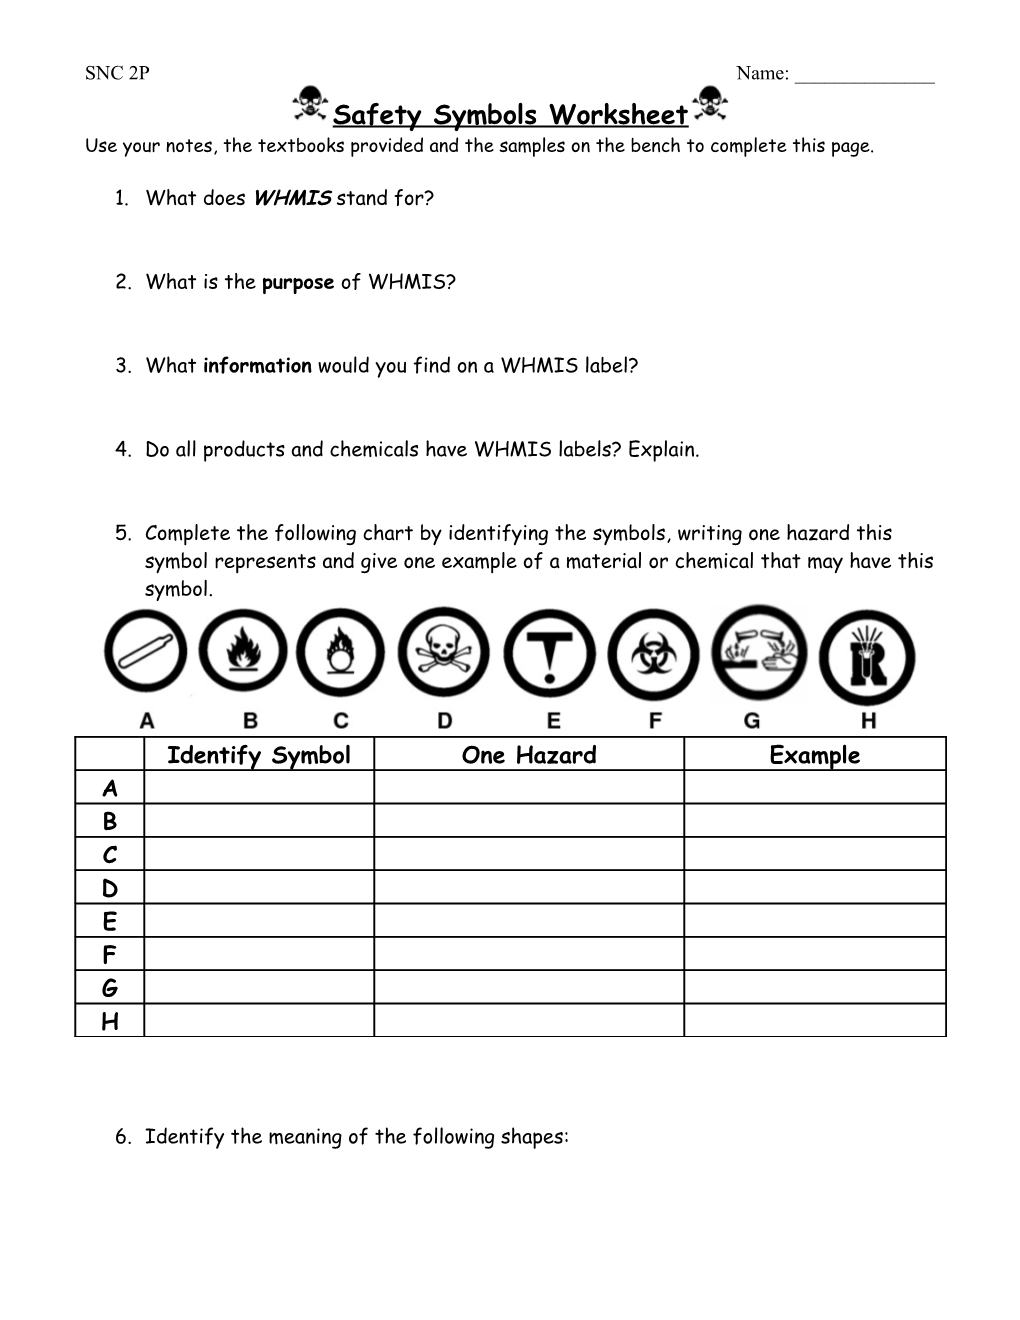 Safety Symbols Worksheet